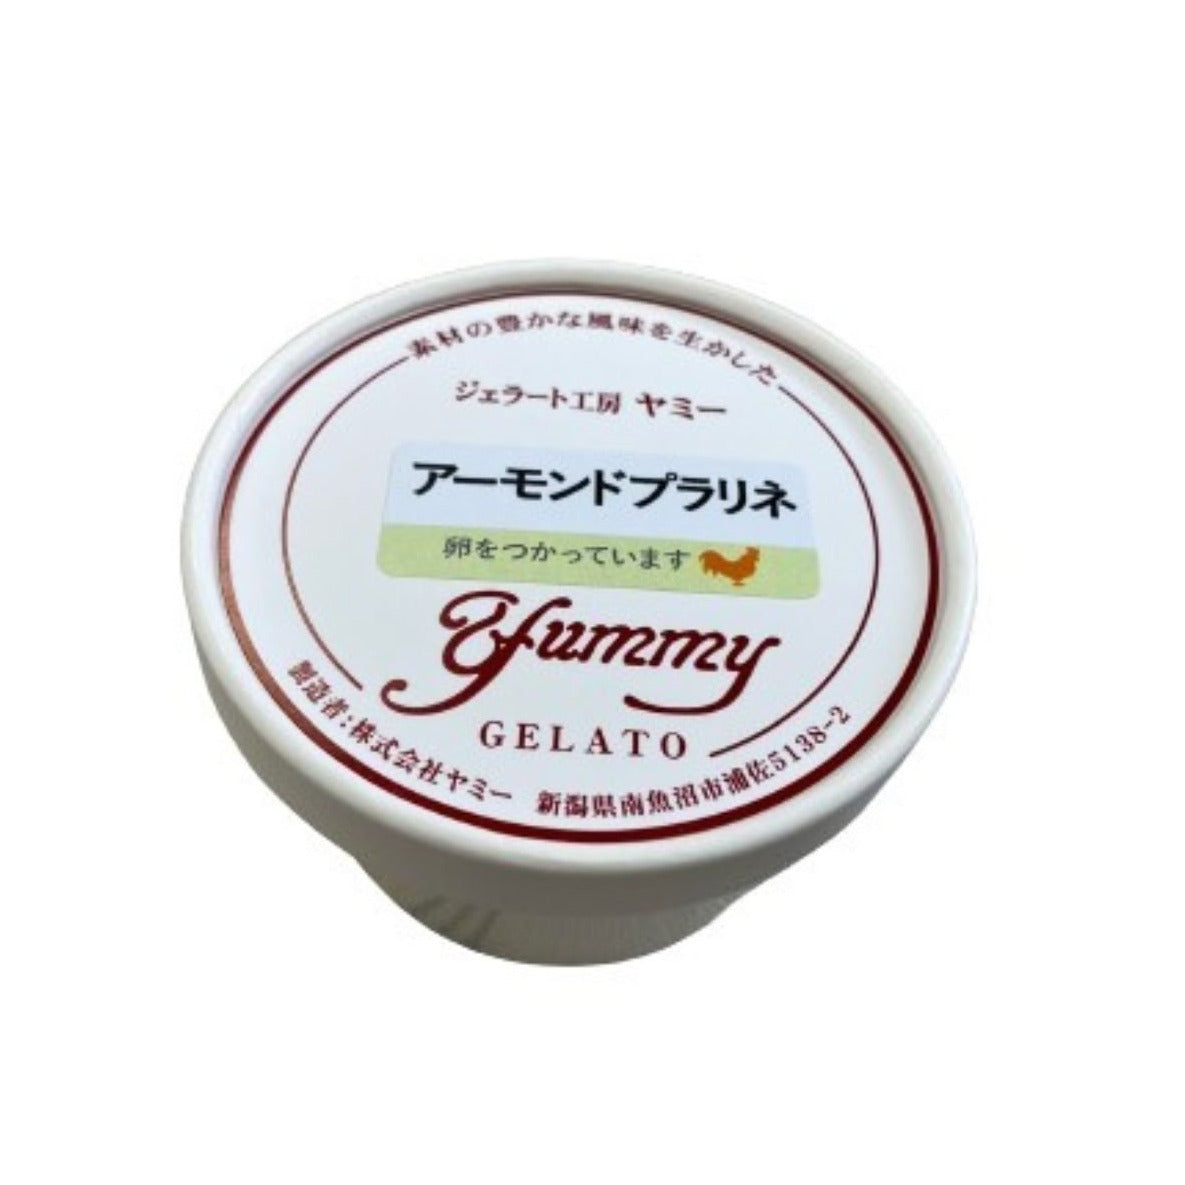 Yummy YUMMY Gelato Almond Pralines - Tokyo Fresh Direct